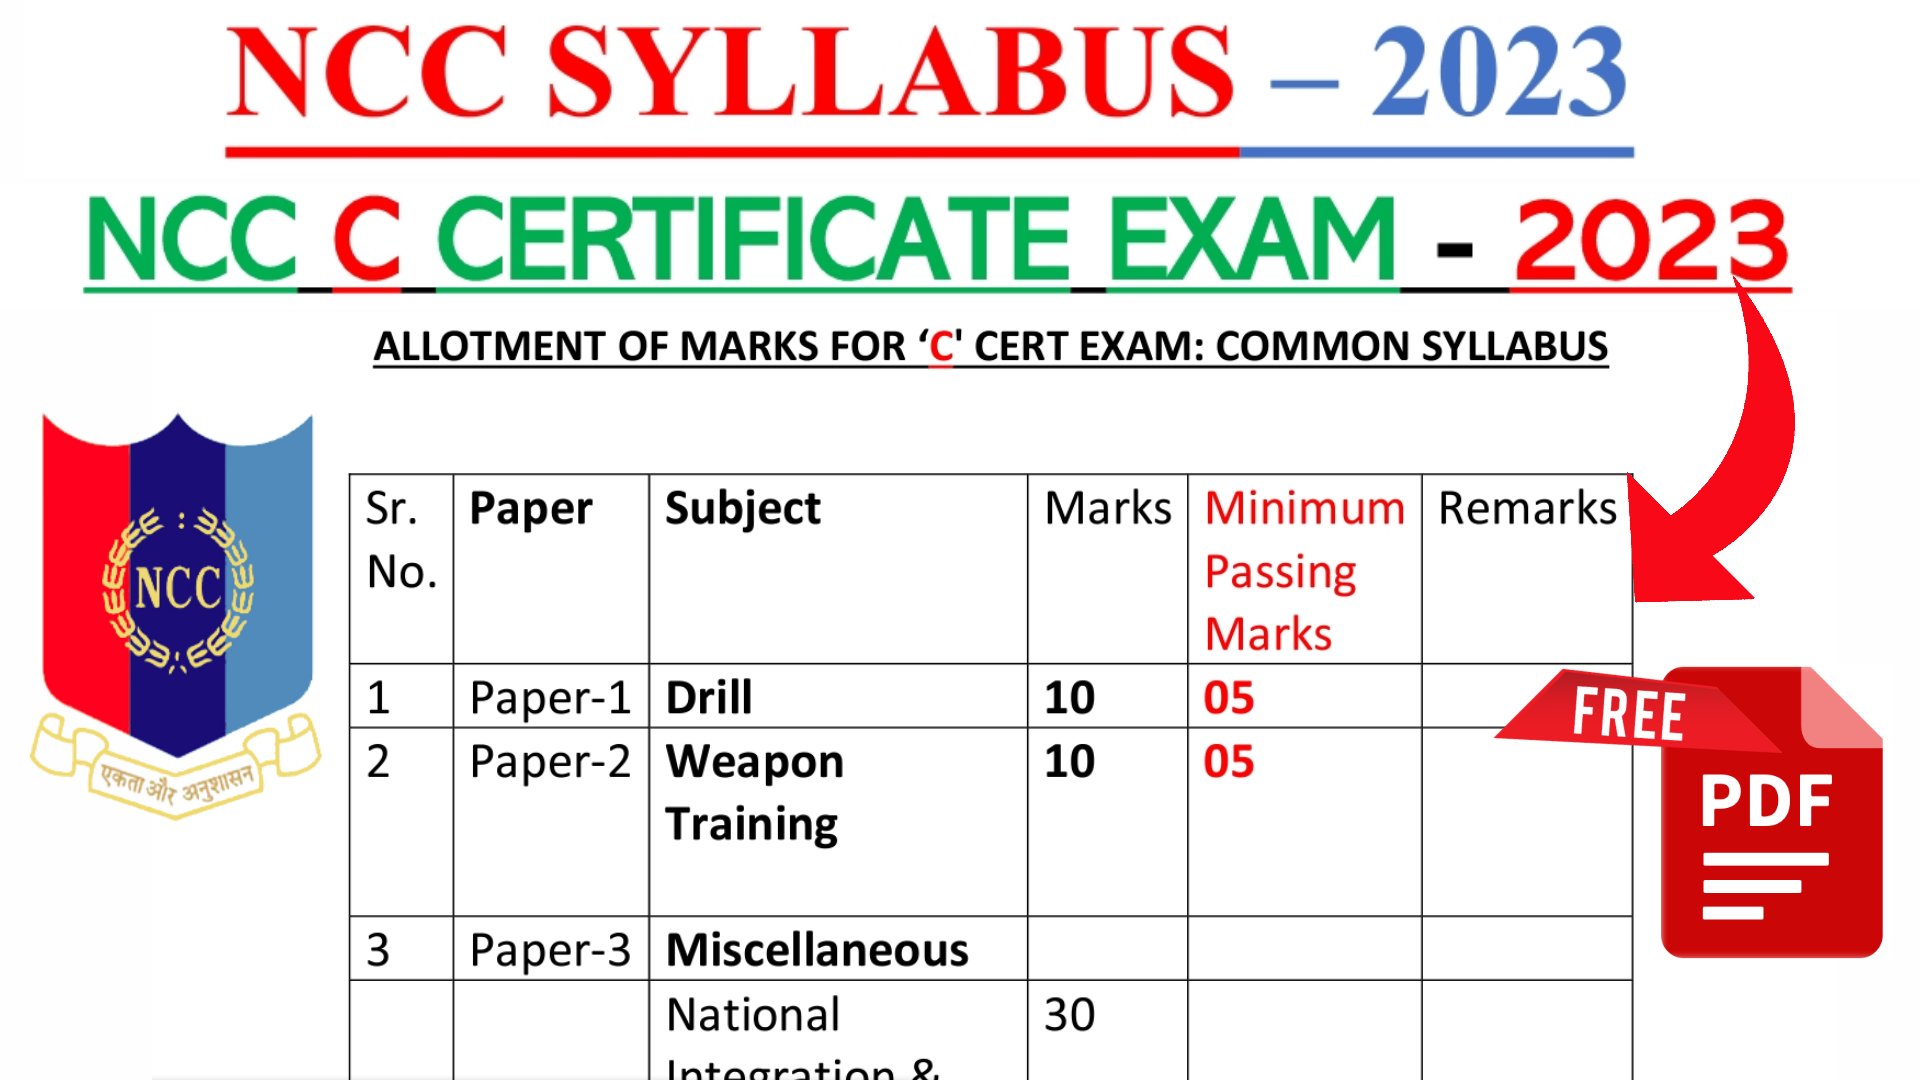 Syllabus of NCC C' Certificate Exam 2023 Mission Ncc